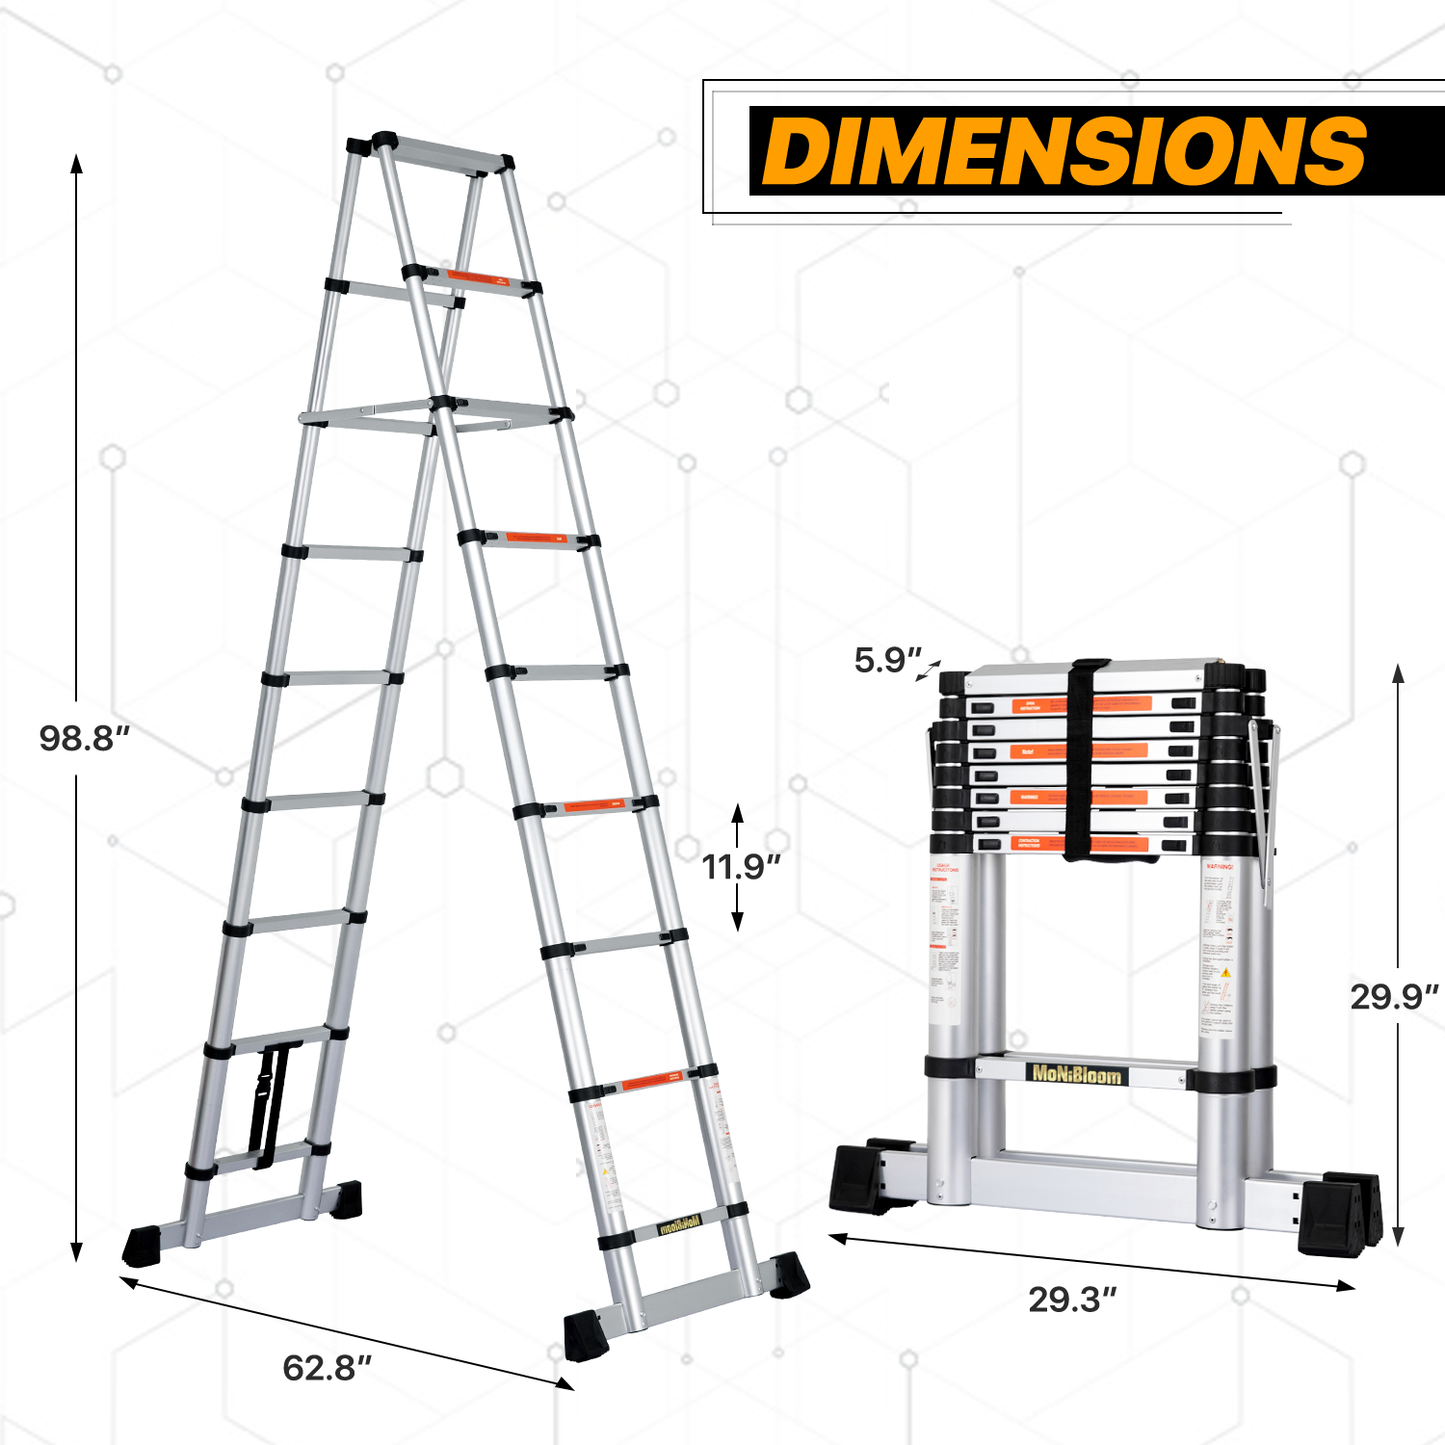 A-Frame Telescoping Ladder w/Stabilizer Bar - 9 Steps 8.23 ft/98.8", Black/Siiver